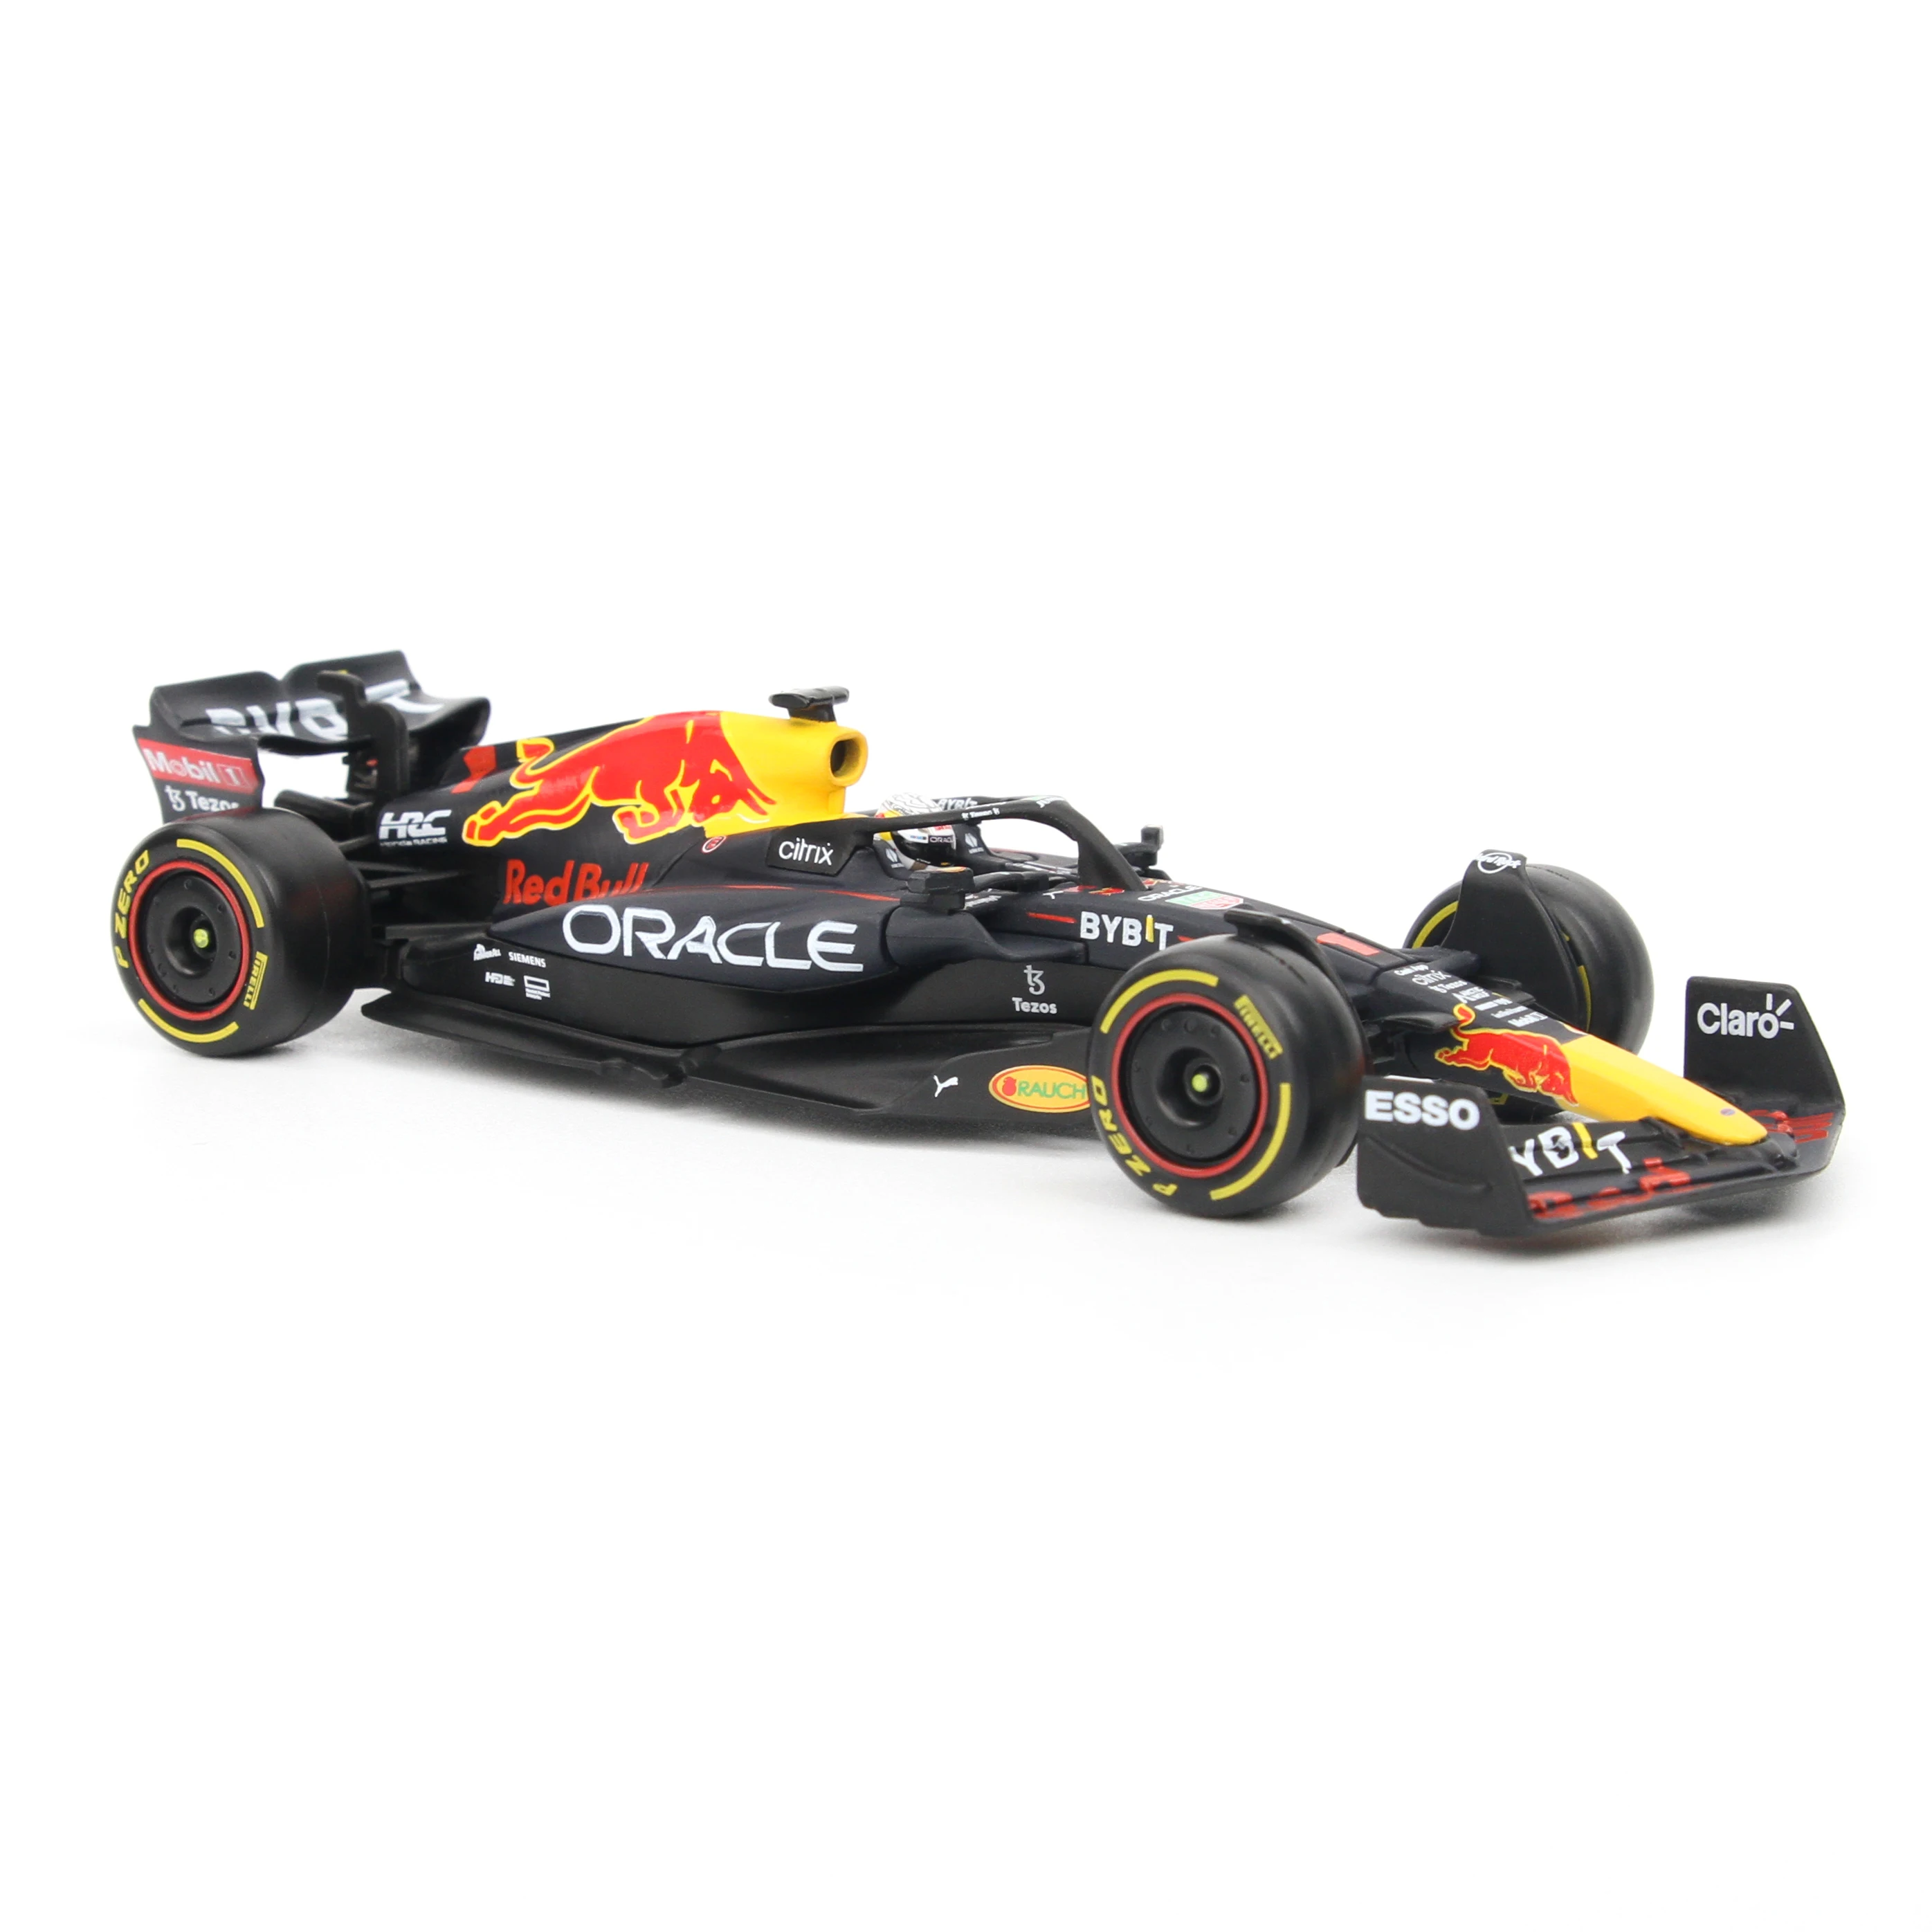 Red Bull F1 Model Car 1 18, Bburago Red Bull Racing